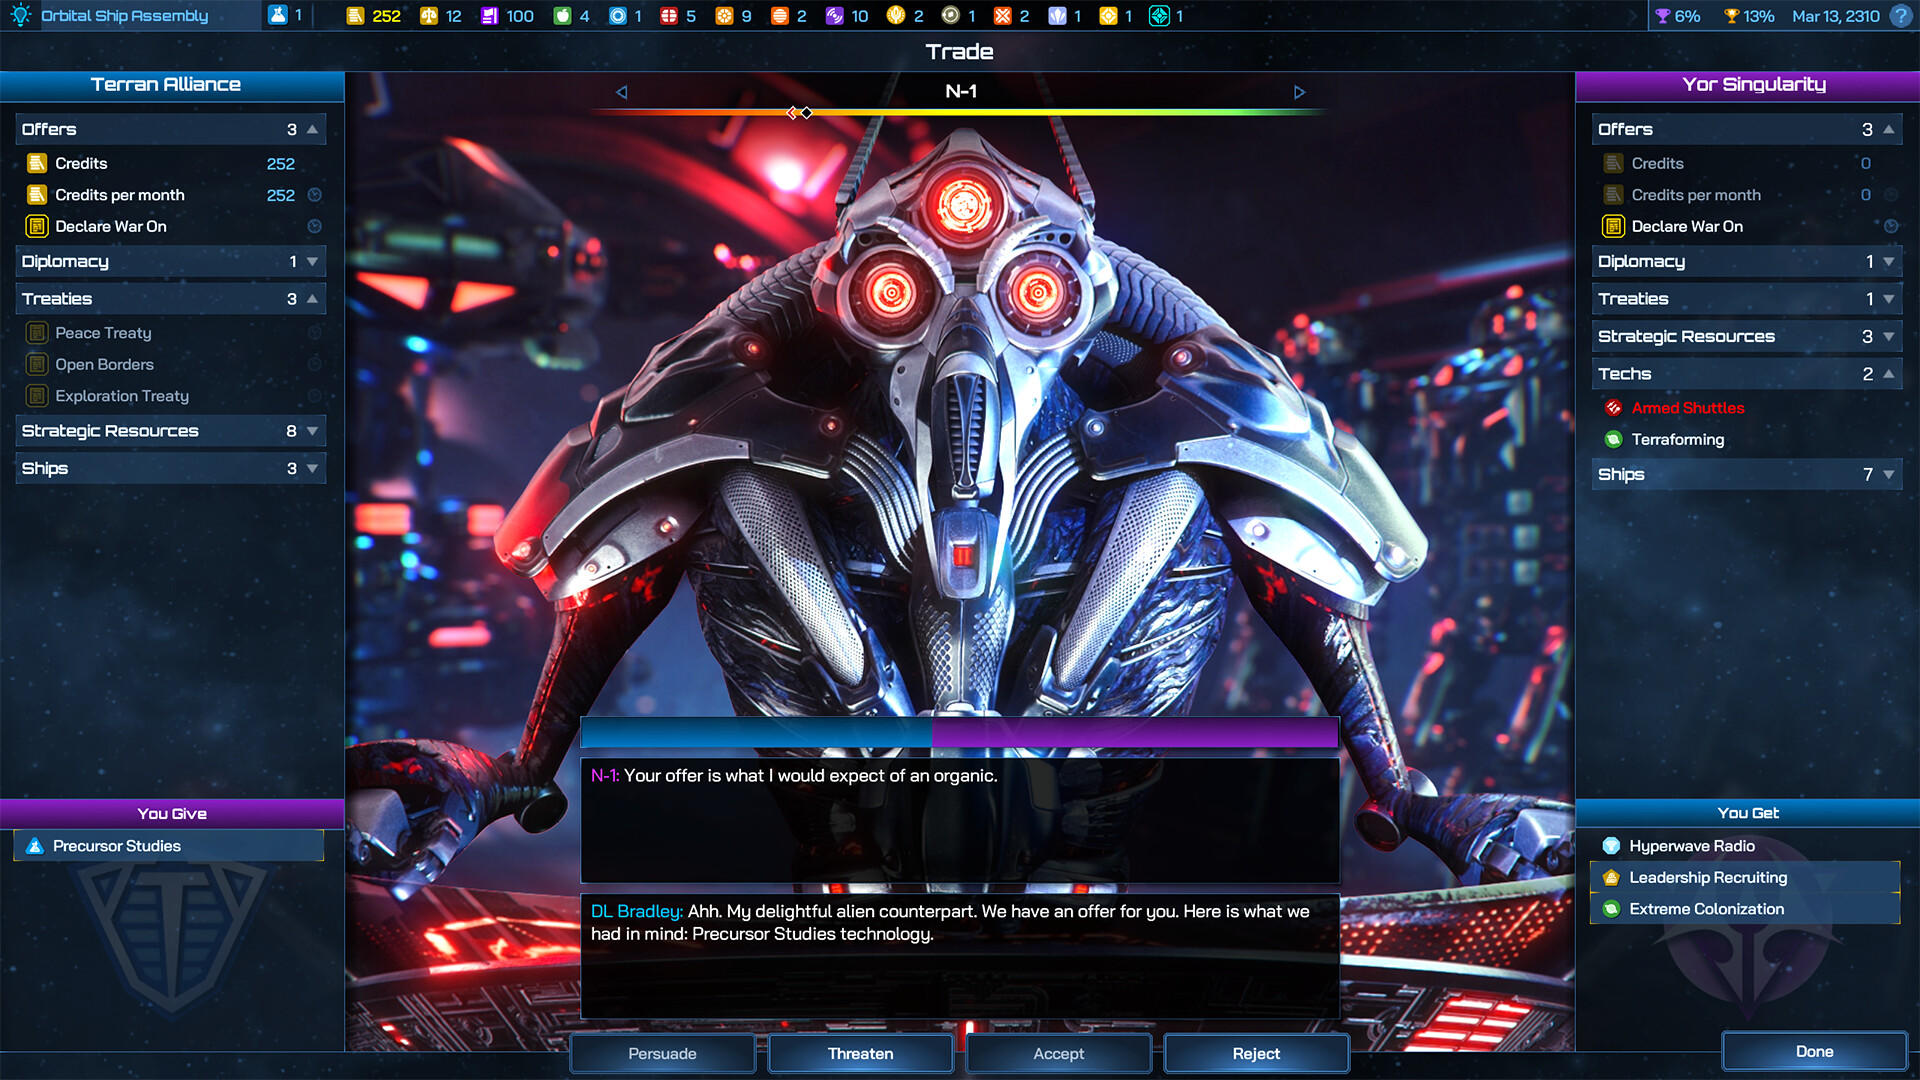 Galactic Civilizations IV screenshot game